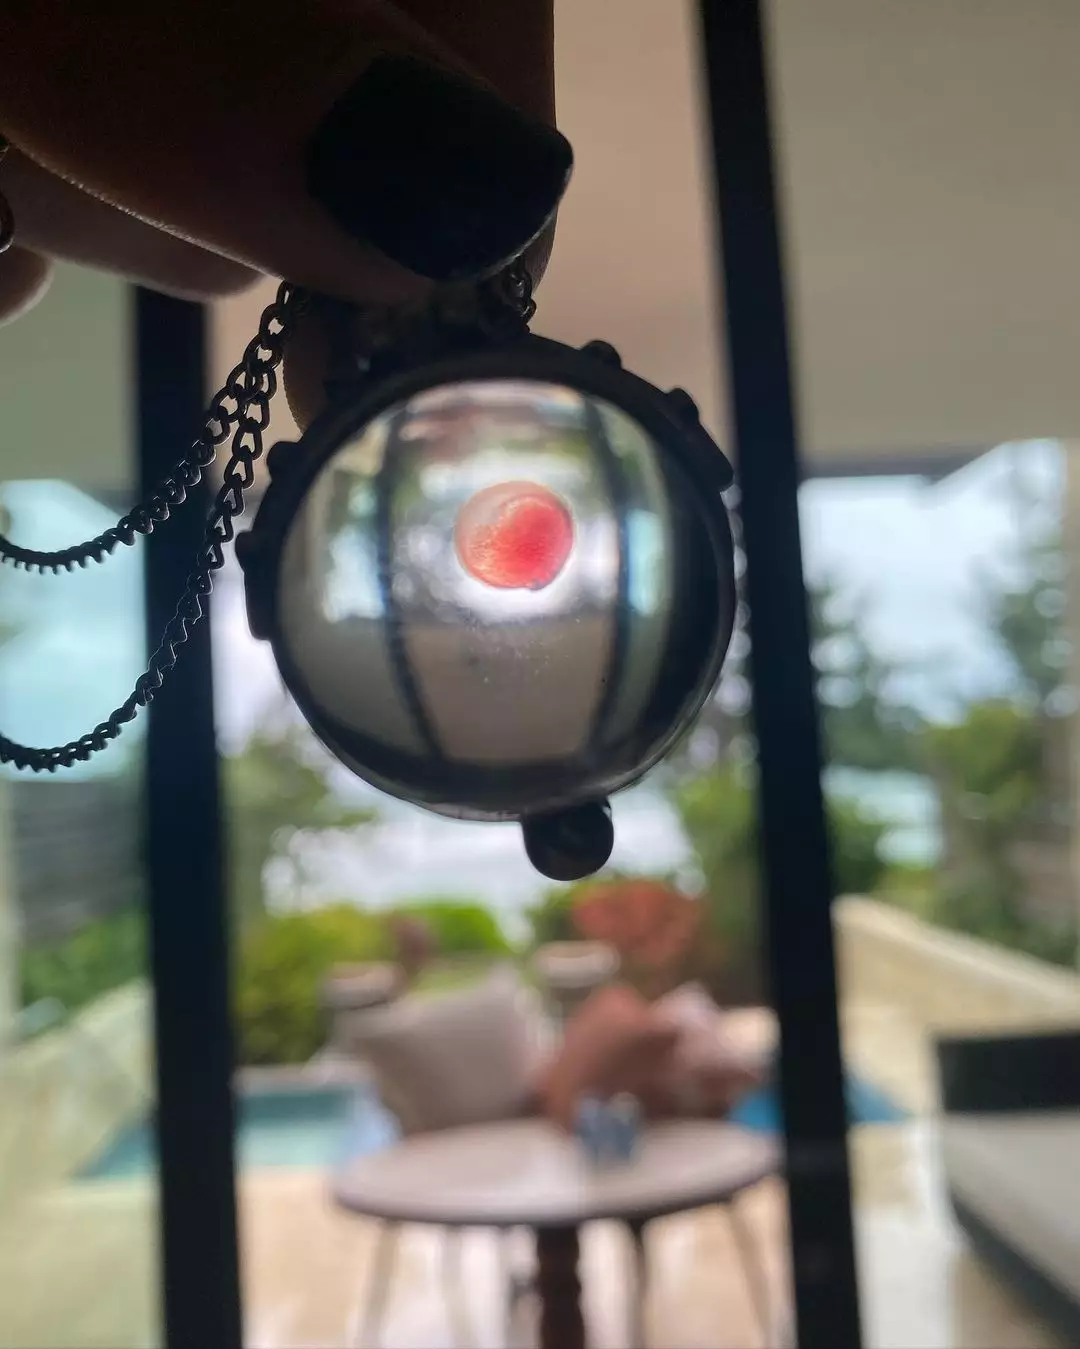 Machine Gun Kelly shared the eye-catching necklace on Instagram.